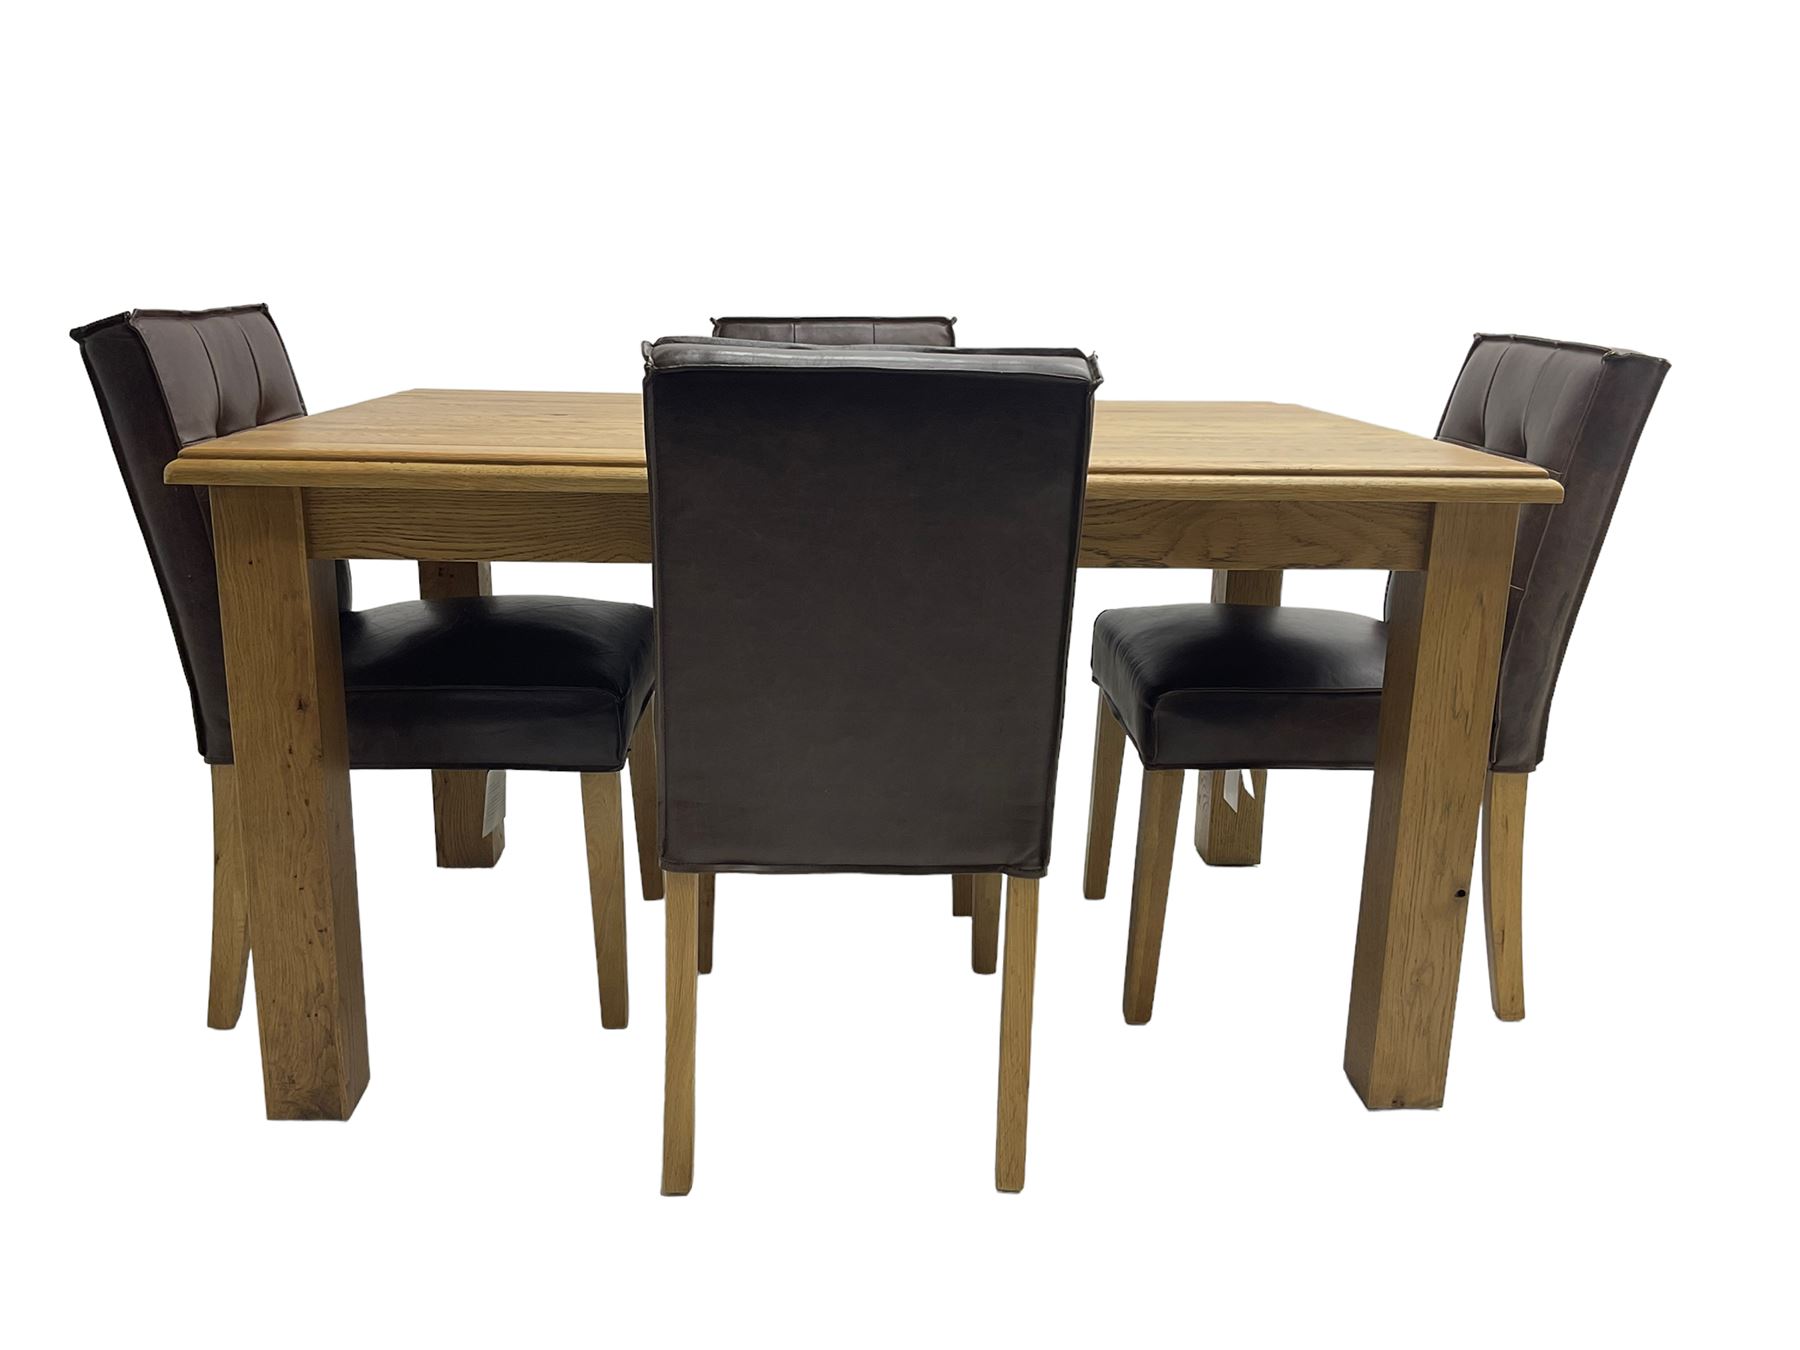 Light oak rectangular dining table - Image 4 of 6